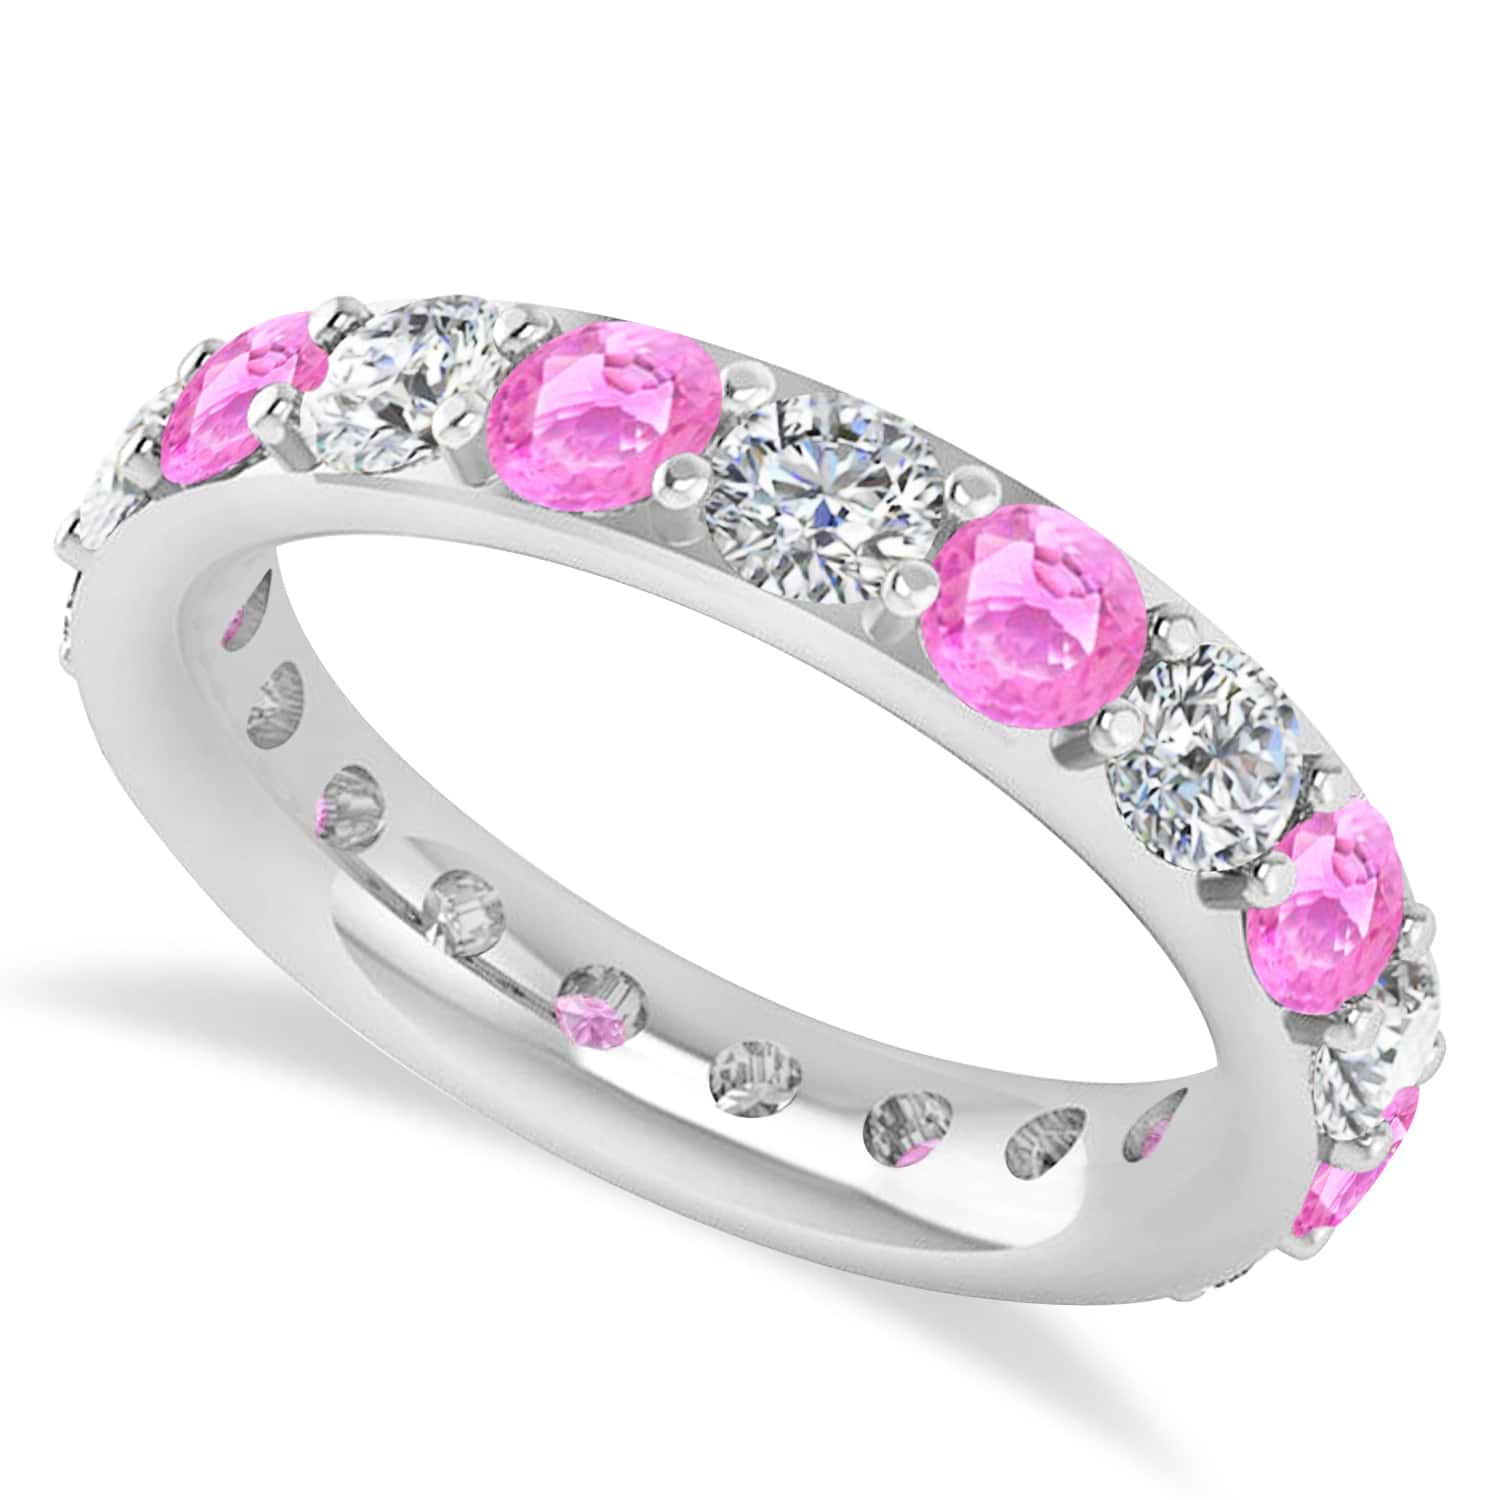 Diamond & Pink Sapphire Eternity Wedding Band 14k White Gold (2.85ct)